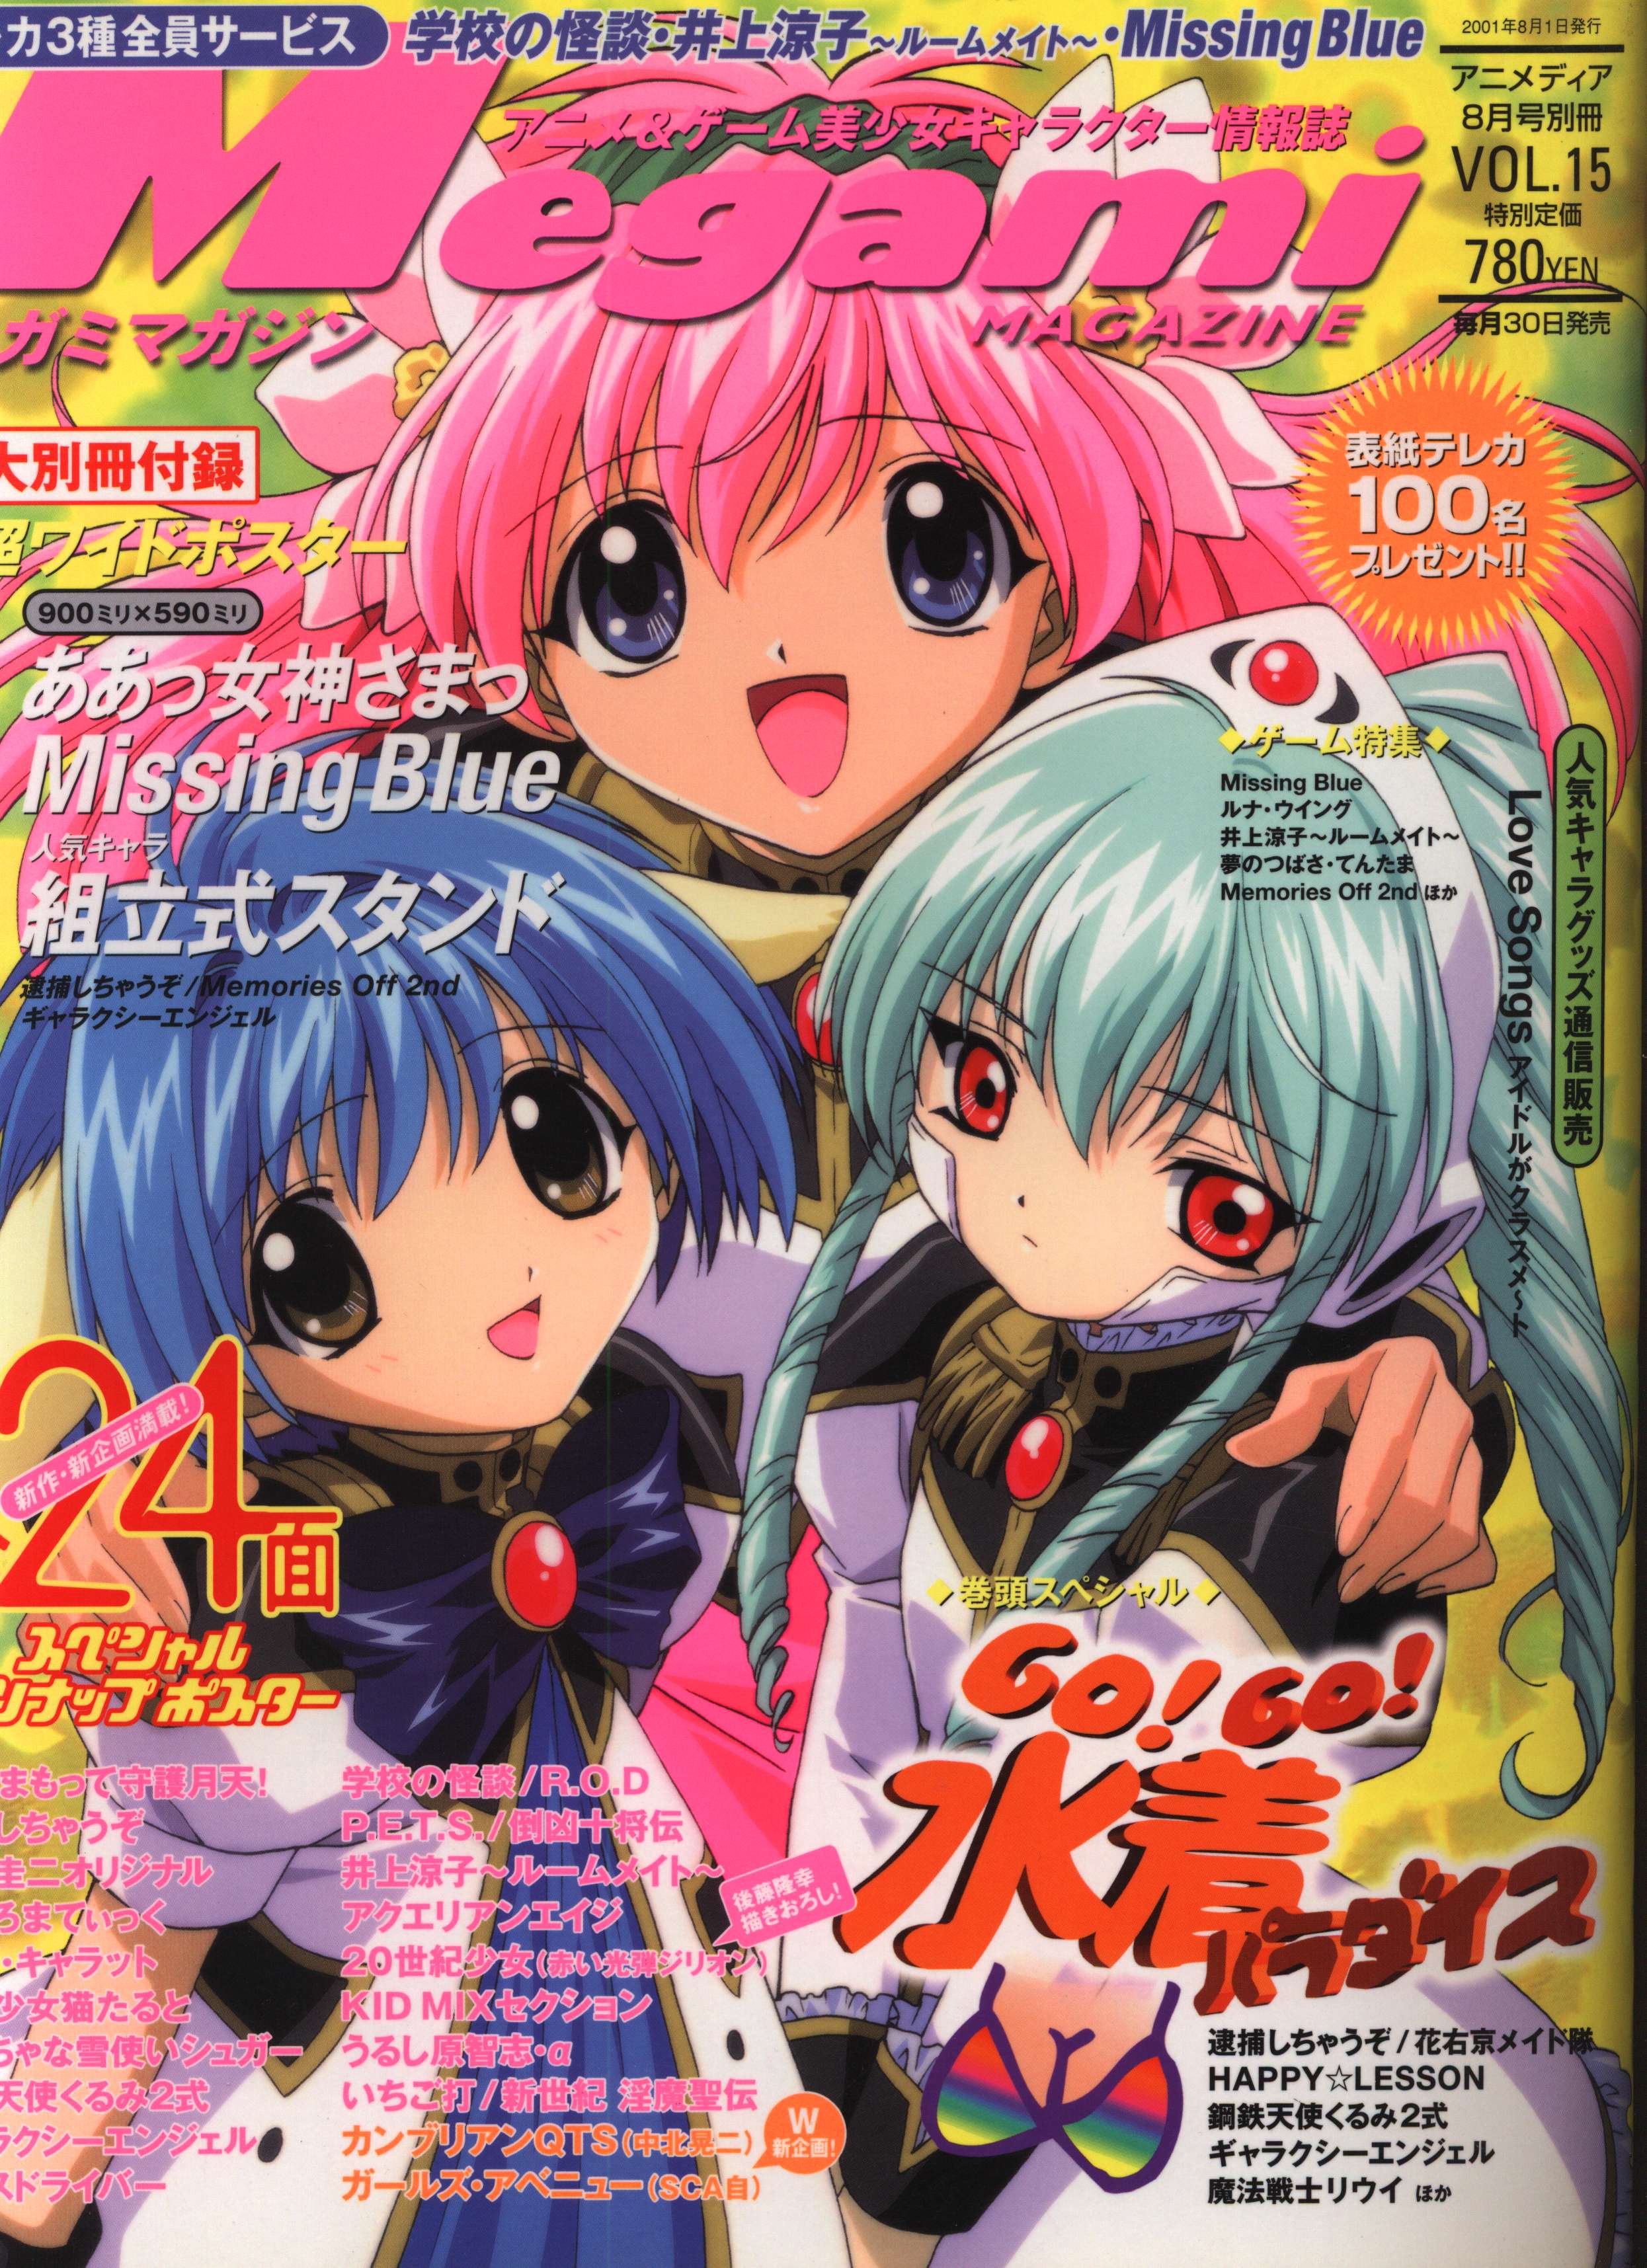 Gakushu Kenkyusha (Gakken) Main Magazine Only Anime / No. | Mandarake  Online Shop